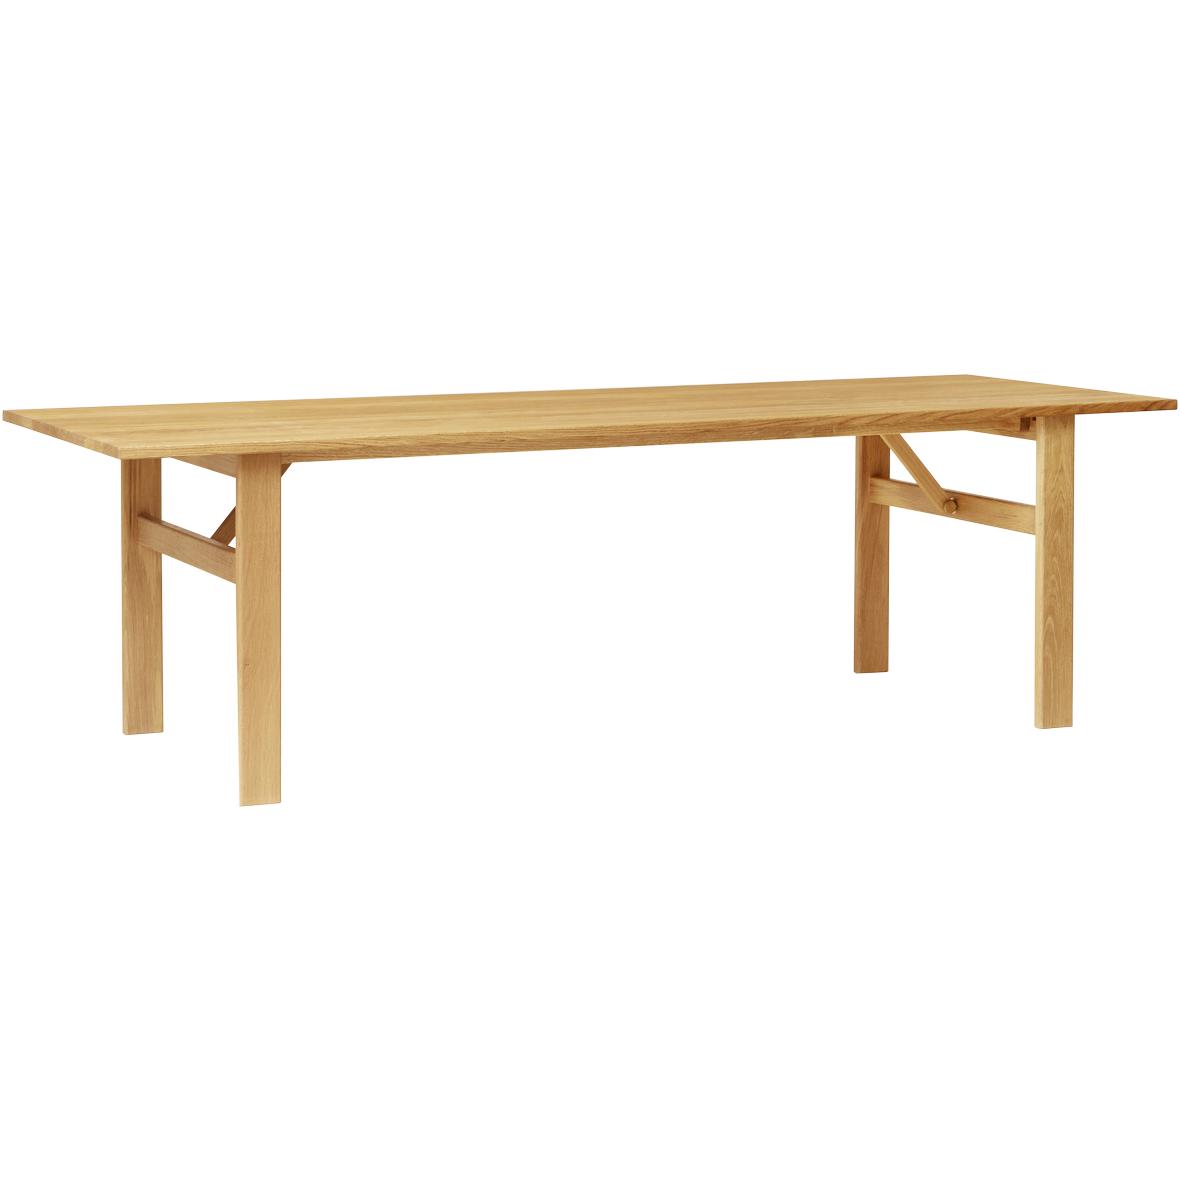 Form & Refine Damsbo jídelní stůl 245 cm, dub